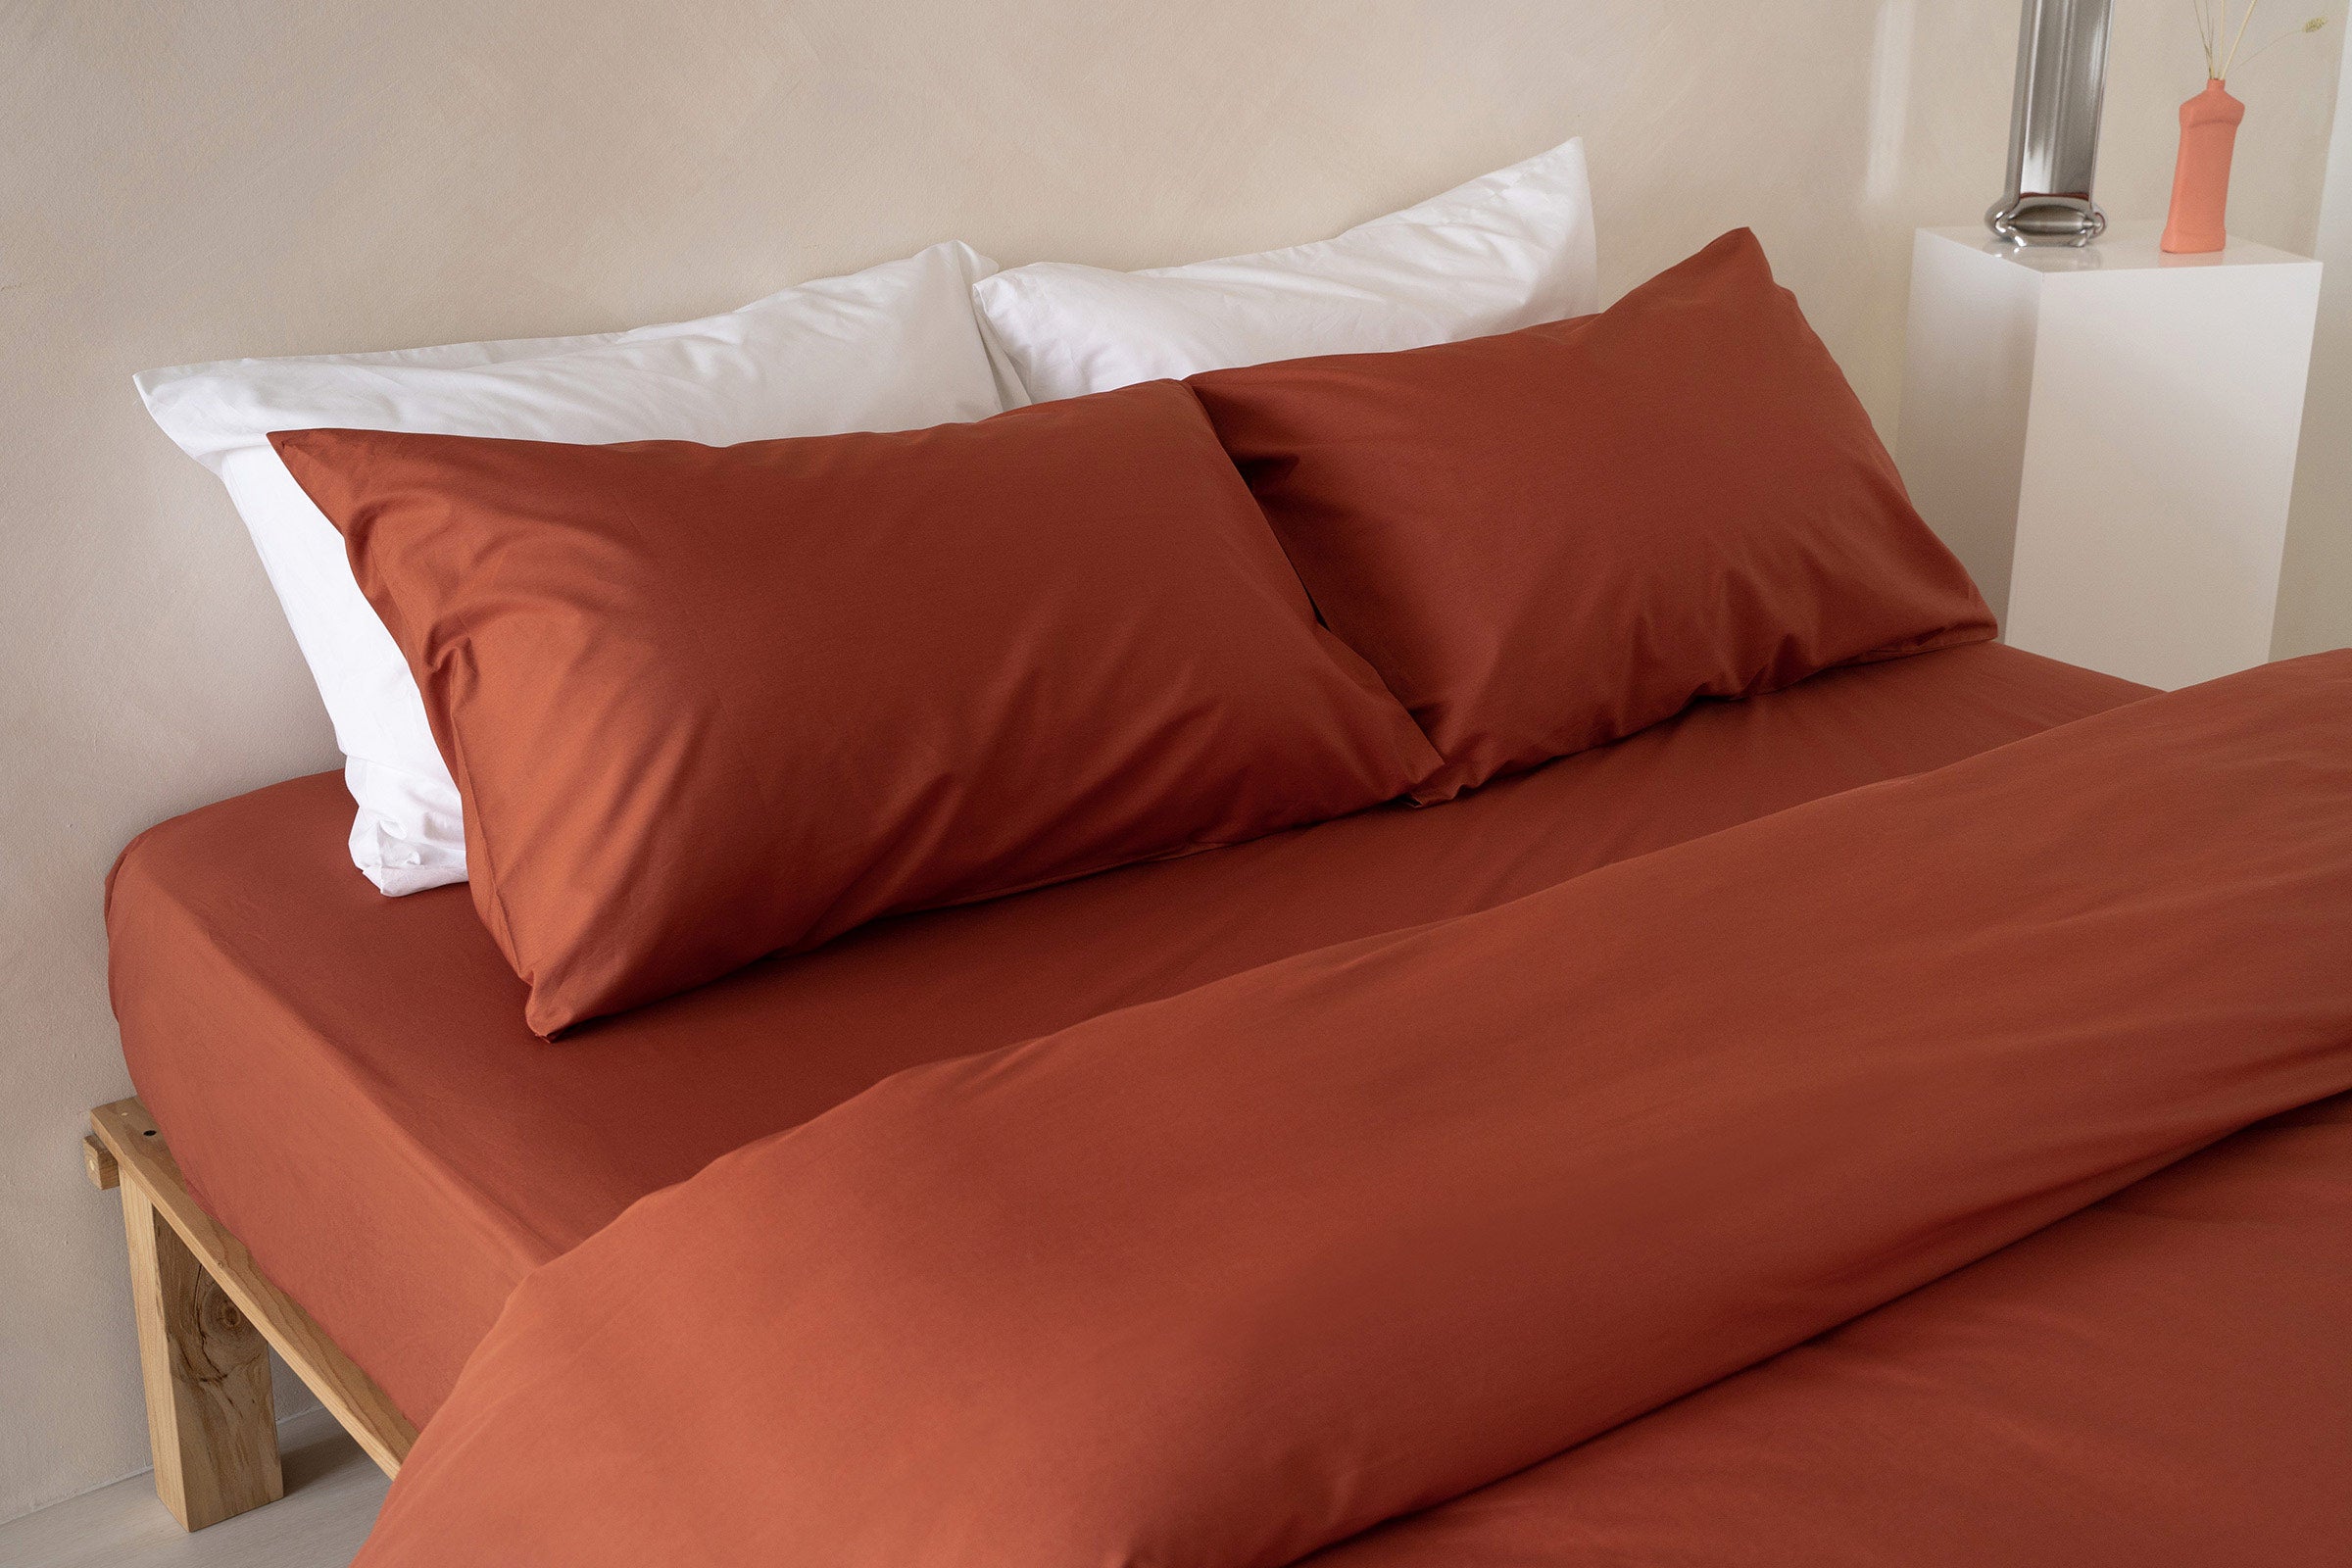 crisp-clay-duvet-cover-fitted-sheet-pillowcase-pair-white-pillowcase-pair-side-view-by-sojao.jpg